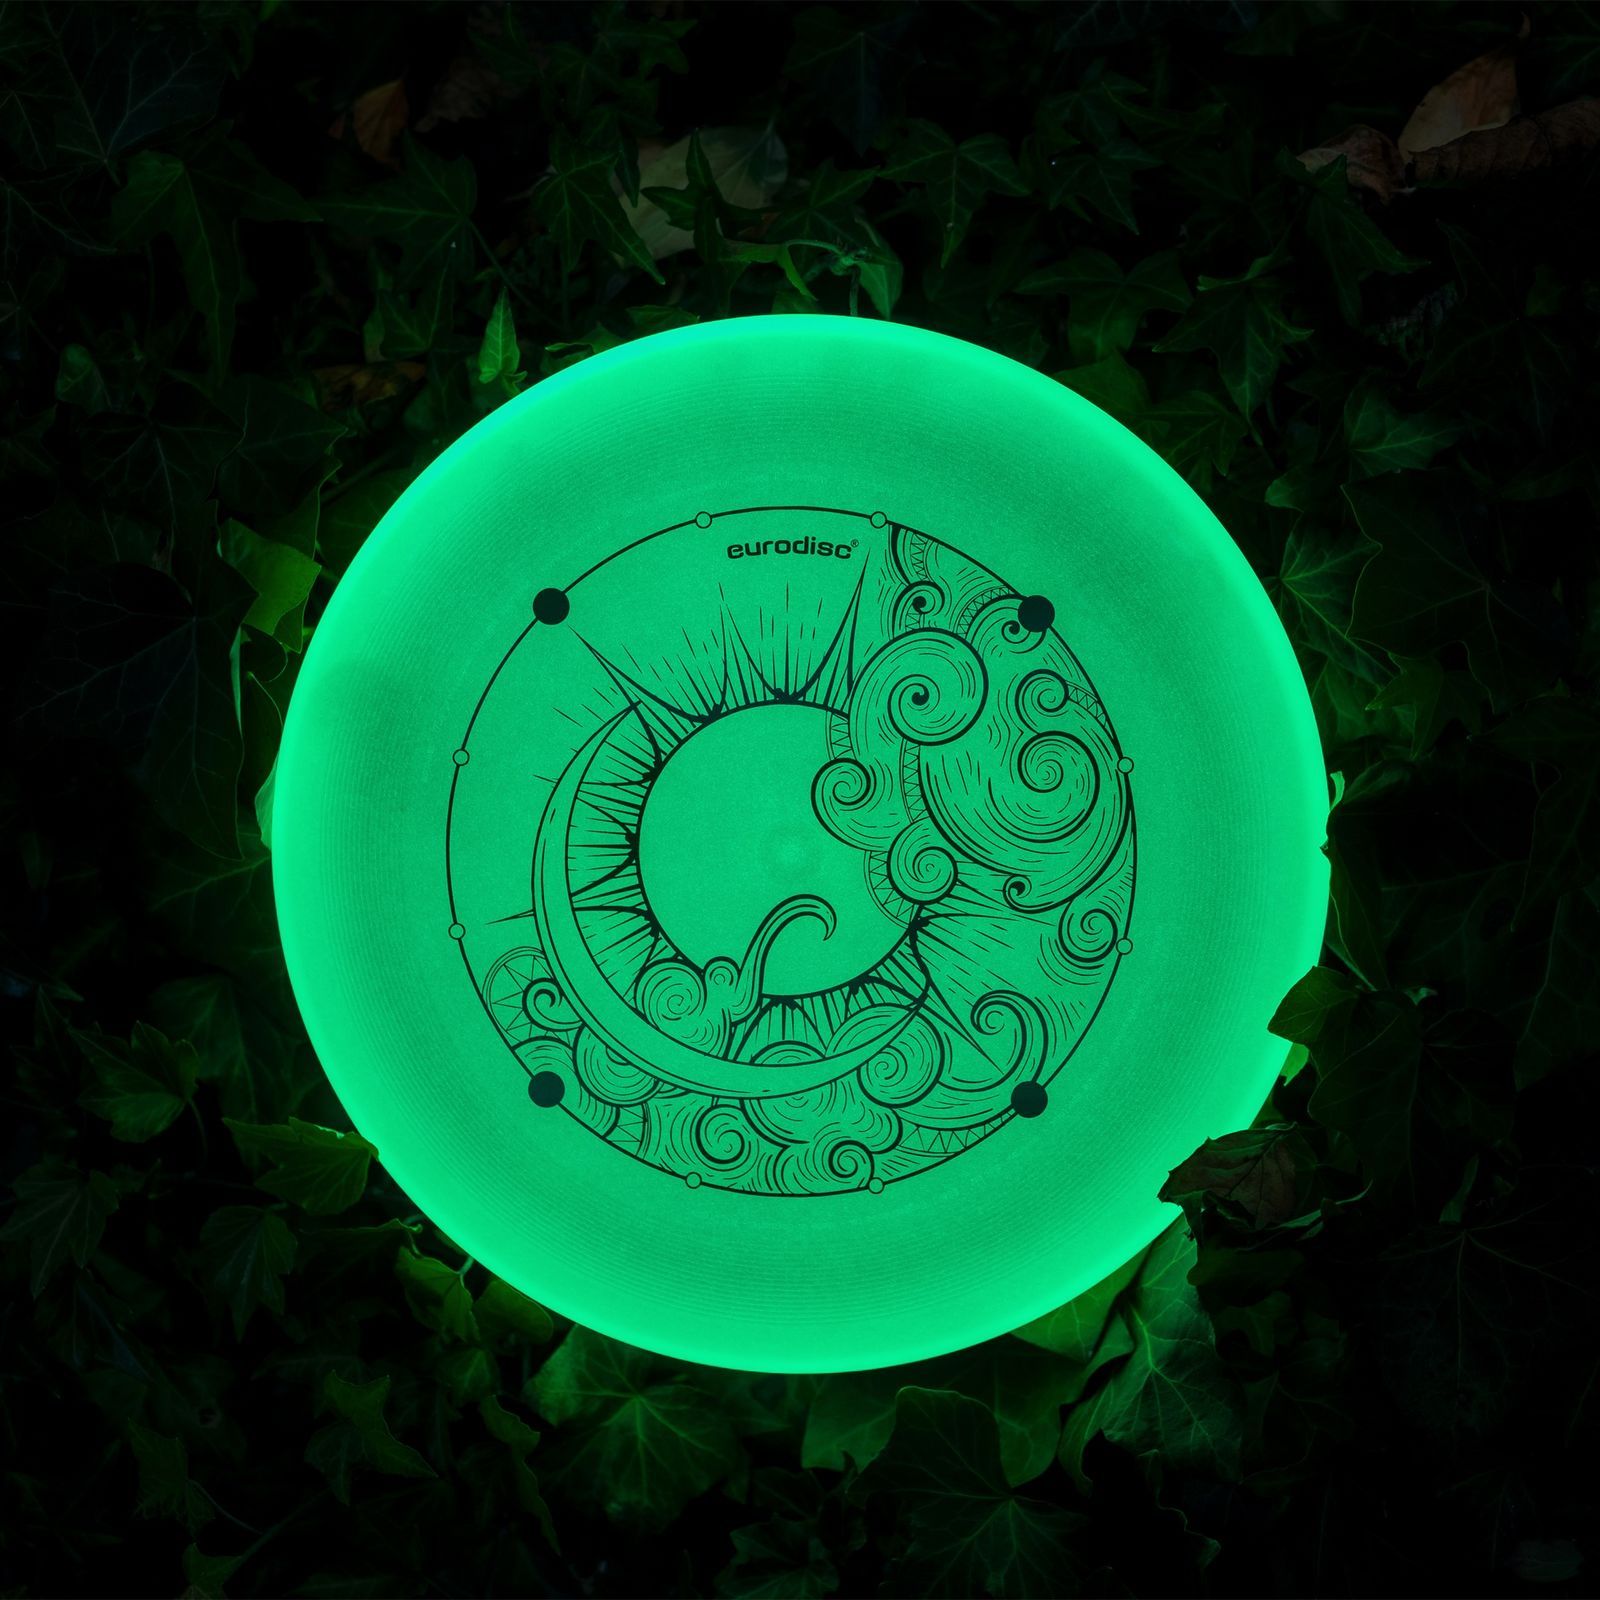 Eurodisc SUPERGlow phosphoreszierend Ø 27.5 cm 175 g grün-/bilder/big/EDO175SGGR_superglow green_glow background_2.jpg